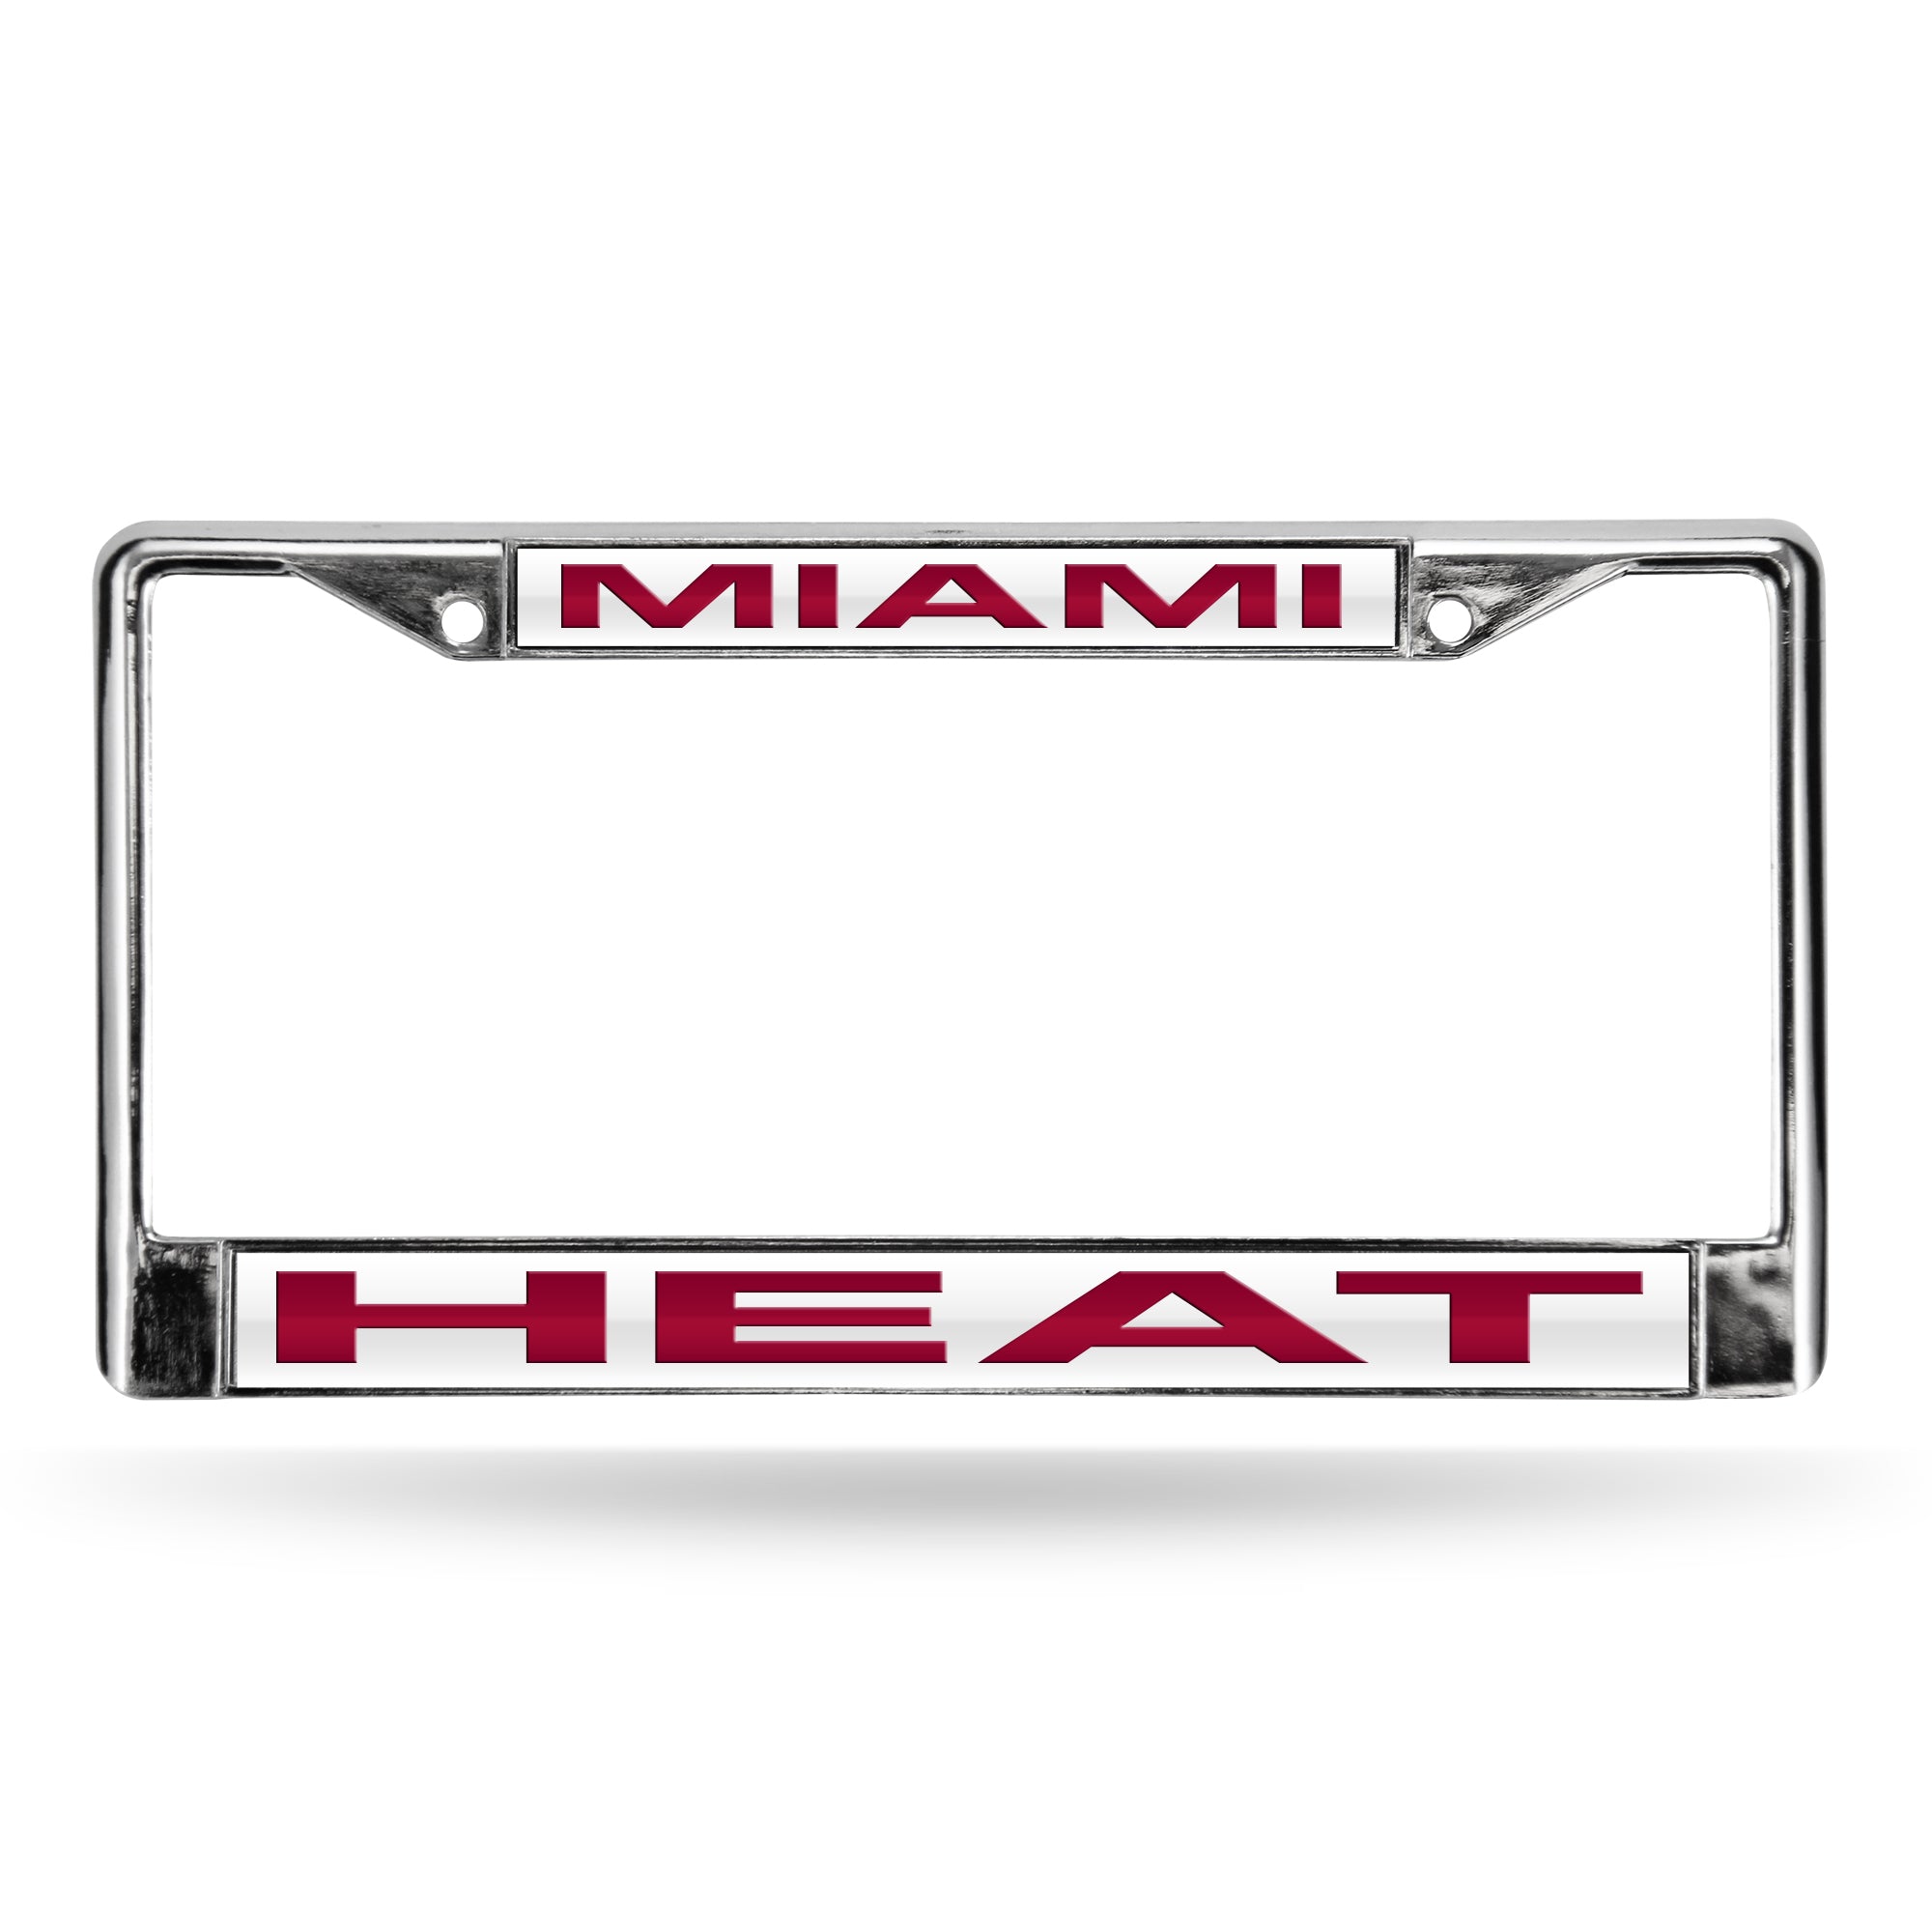 Miami Heat Laser Chrome 12 x 6 License Plate Frame